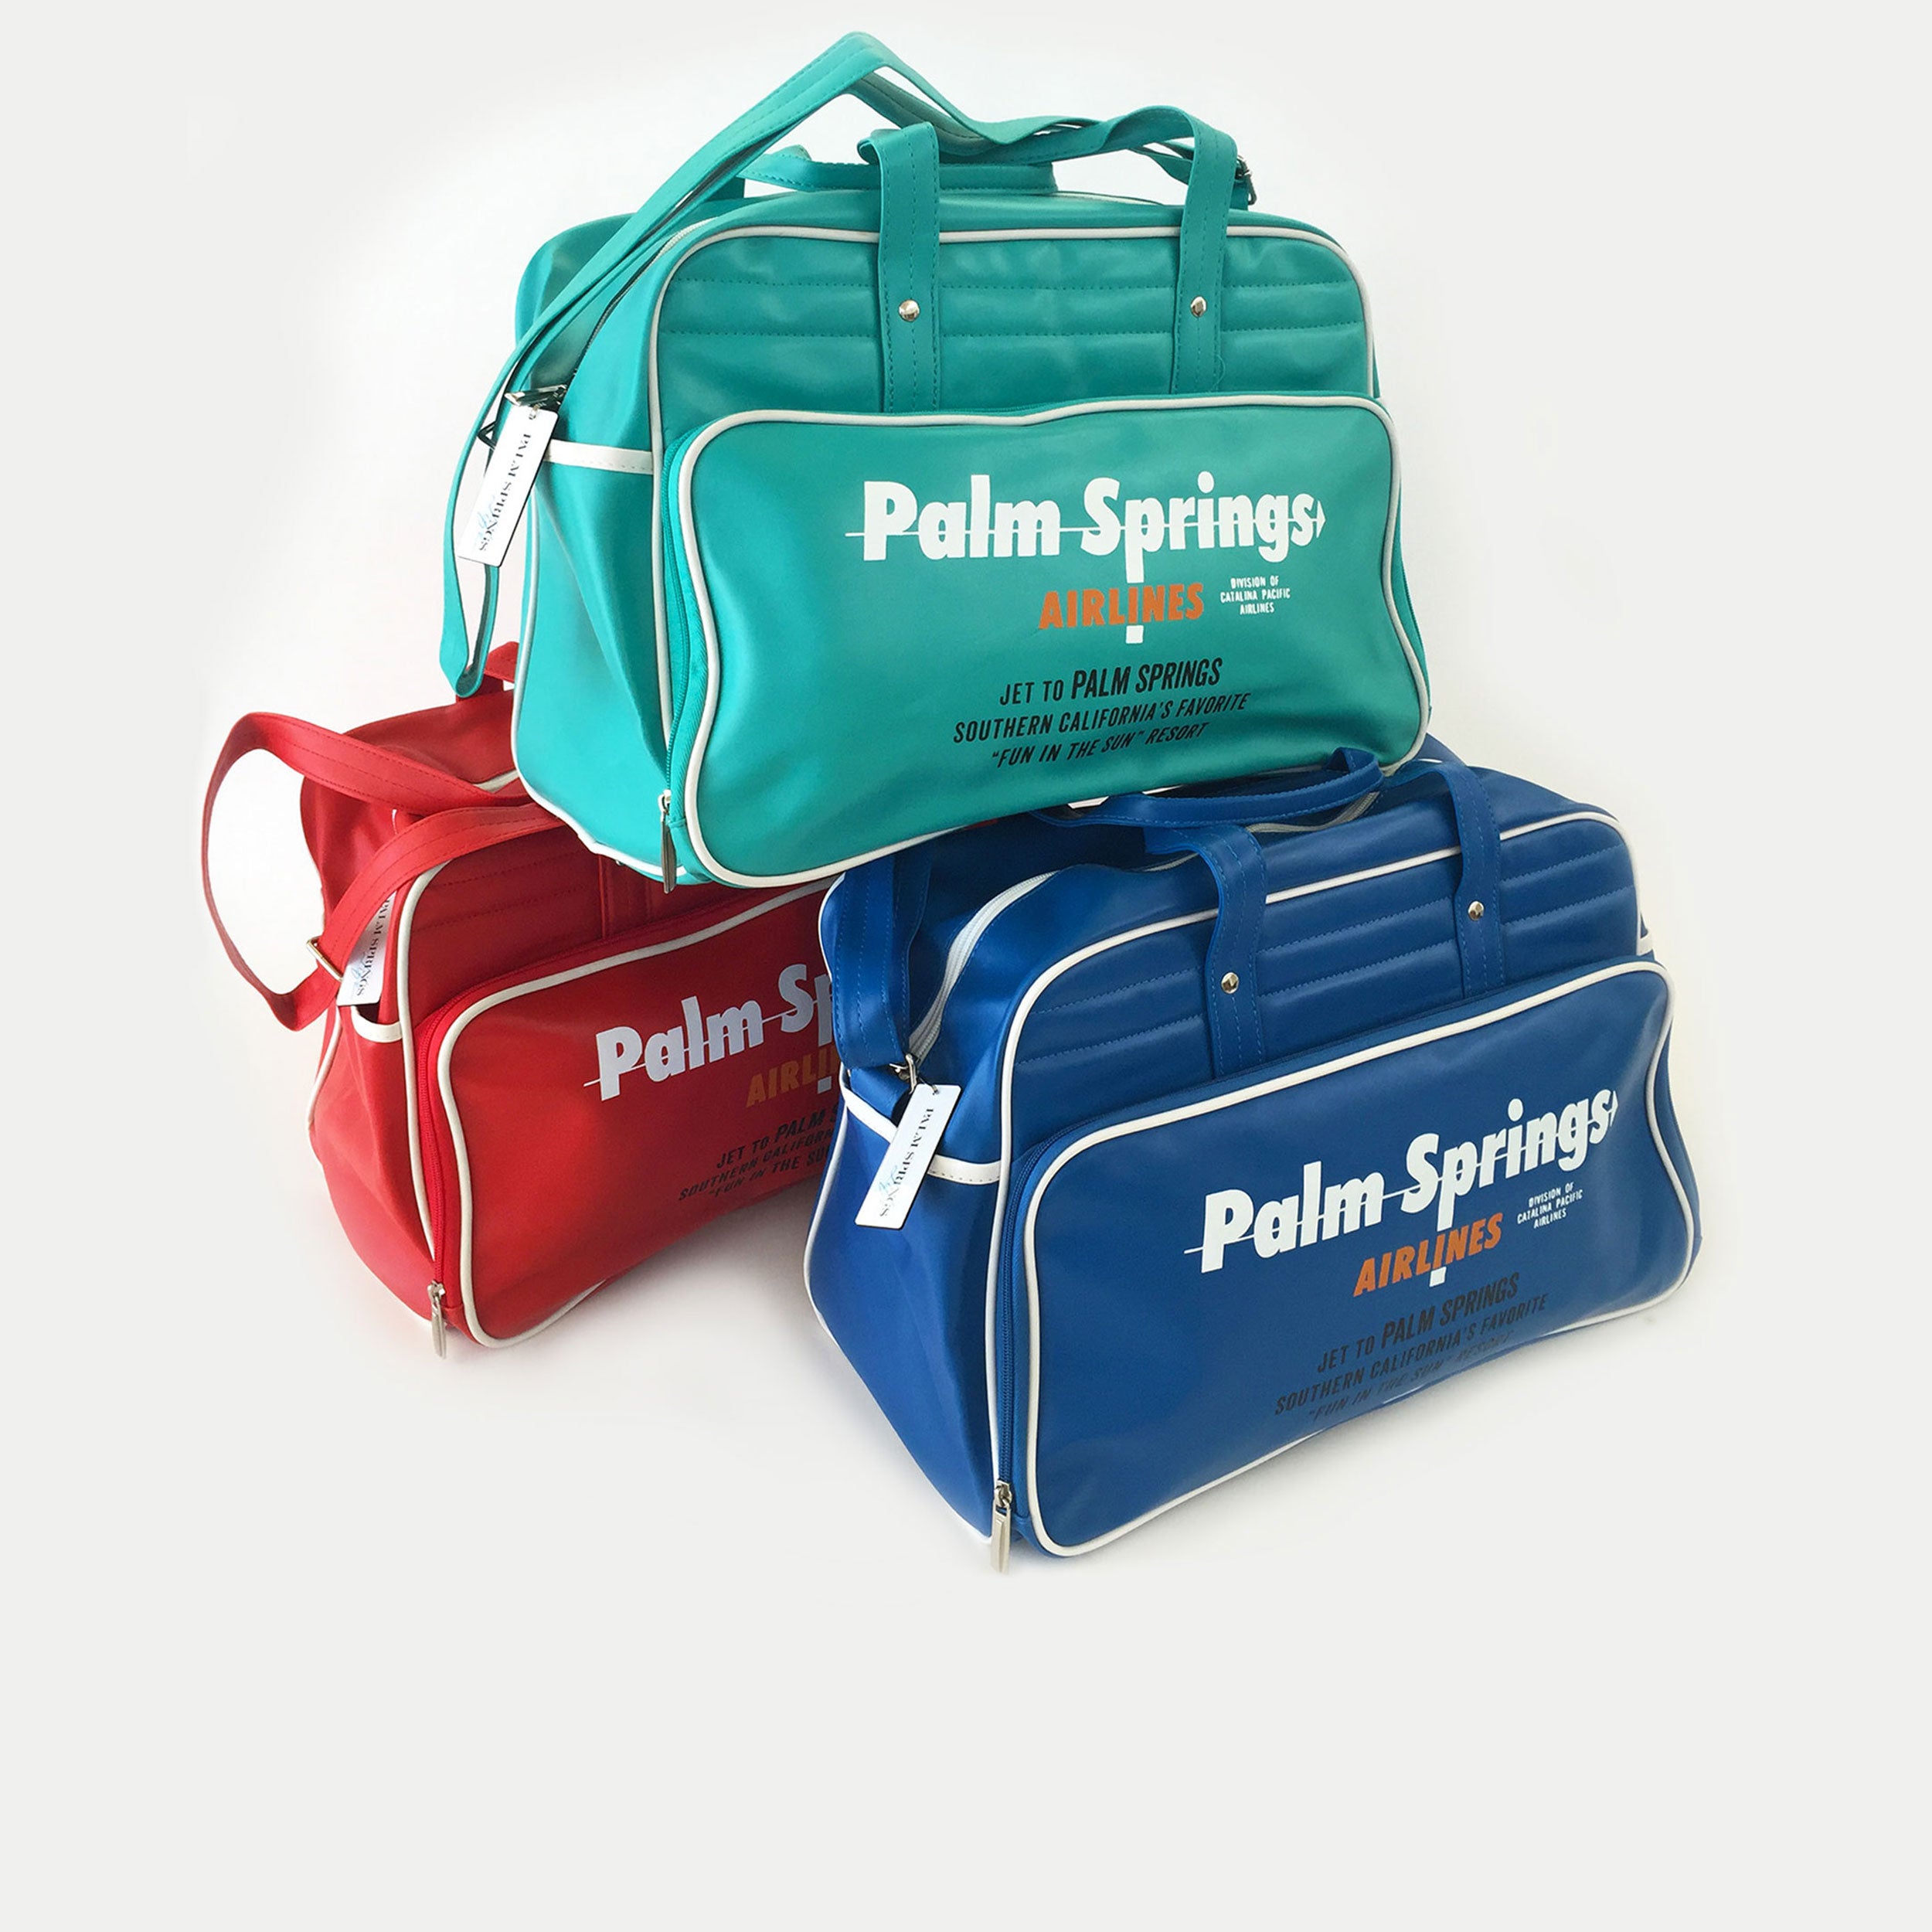 destination-psp-palm-springs-airlines-bags_m.jpg